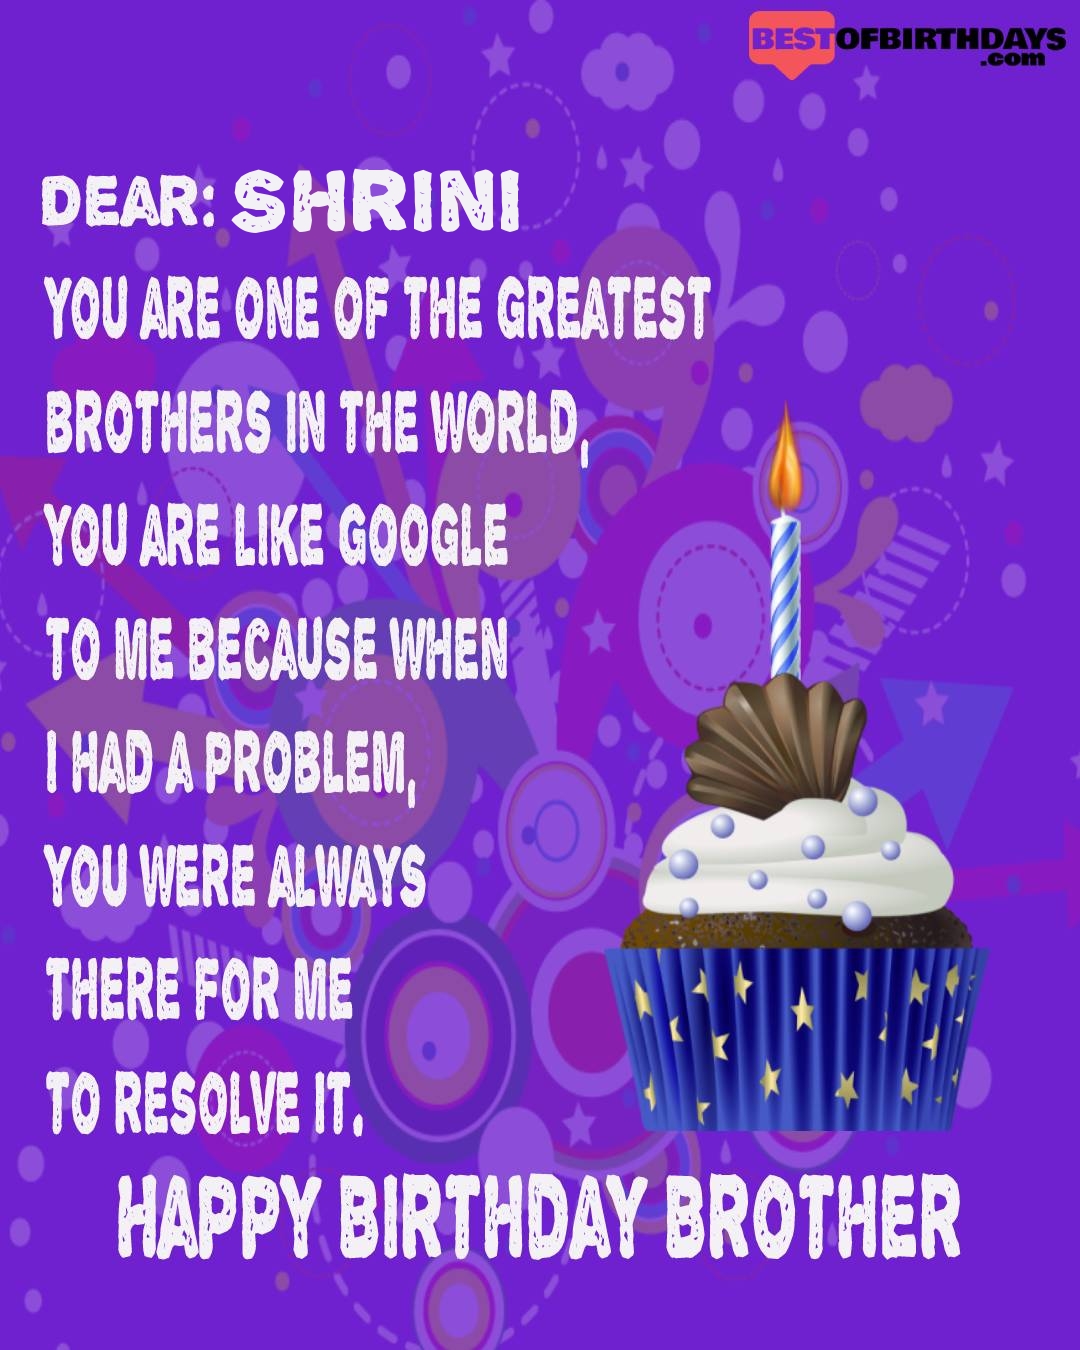 Happy birthday shrini bhai brother bro